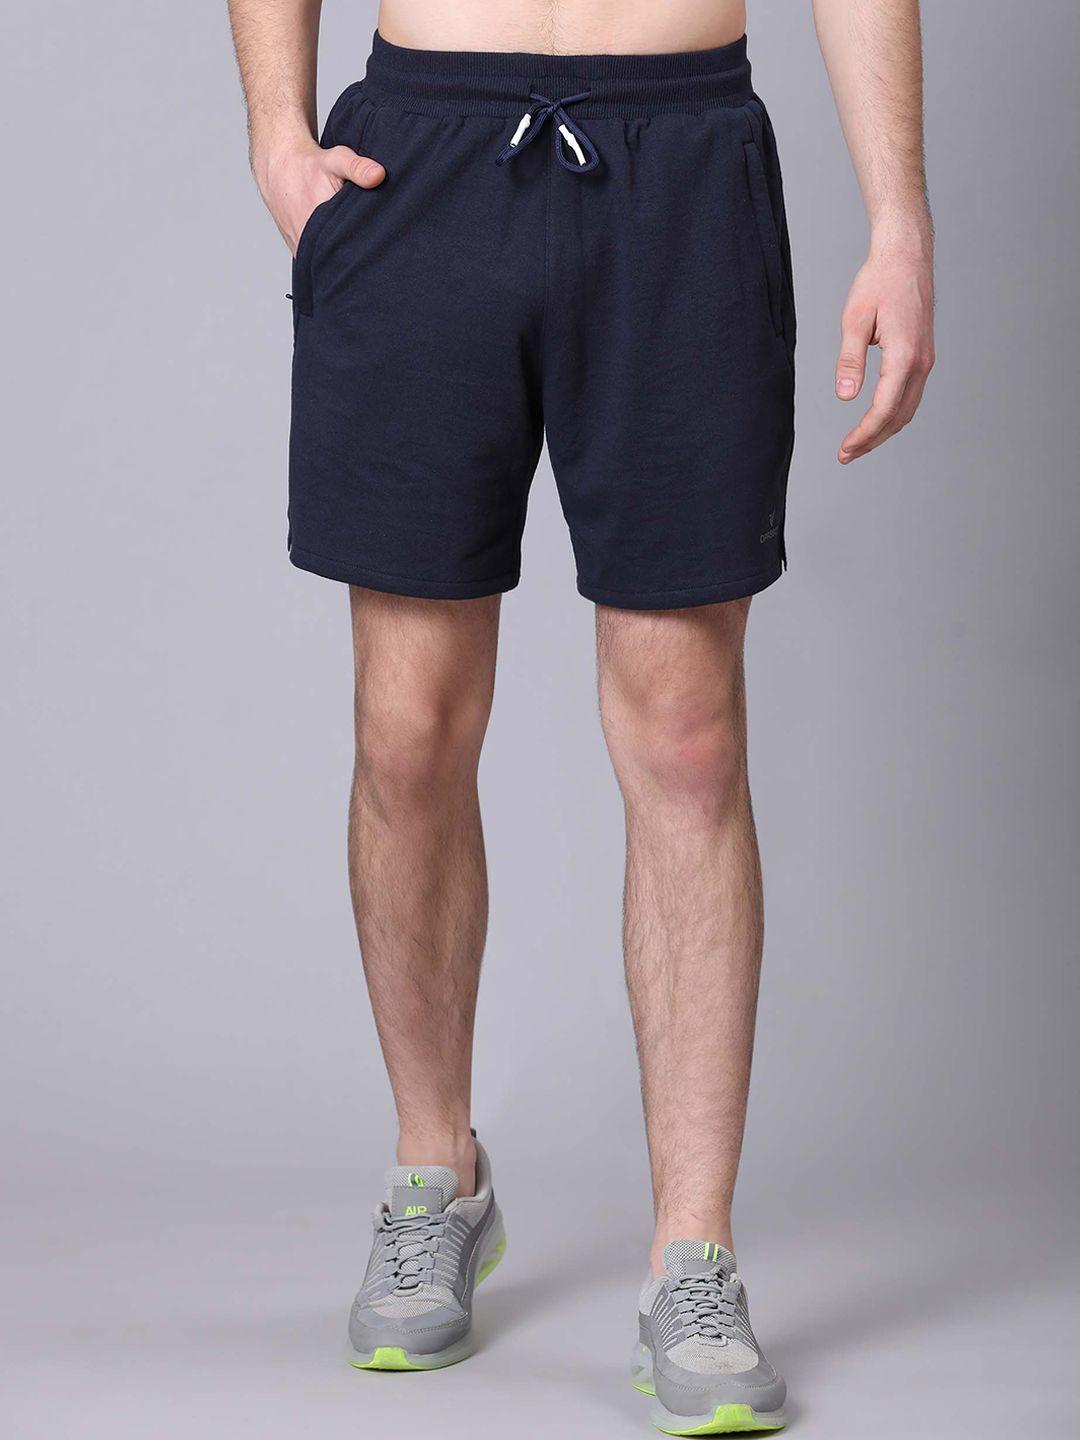 dpassion-men-running-rapid-dry-sports-shorts